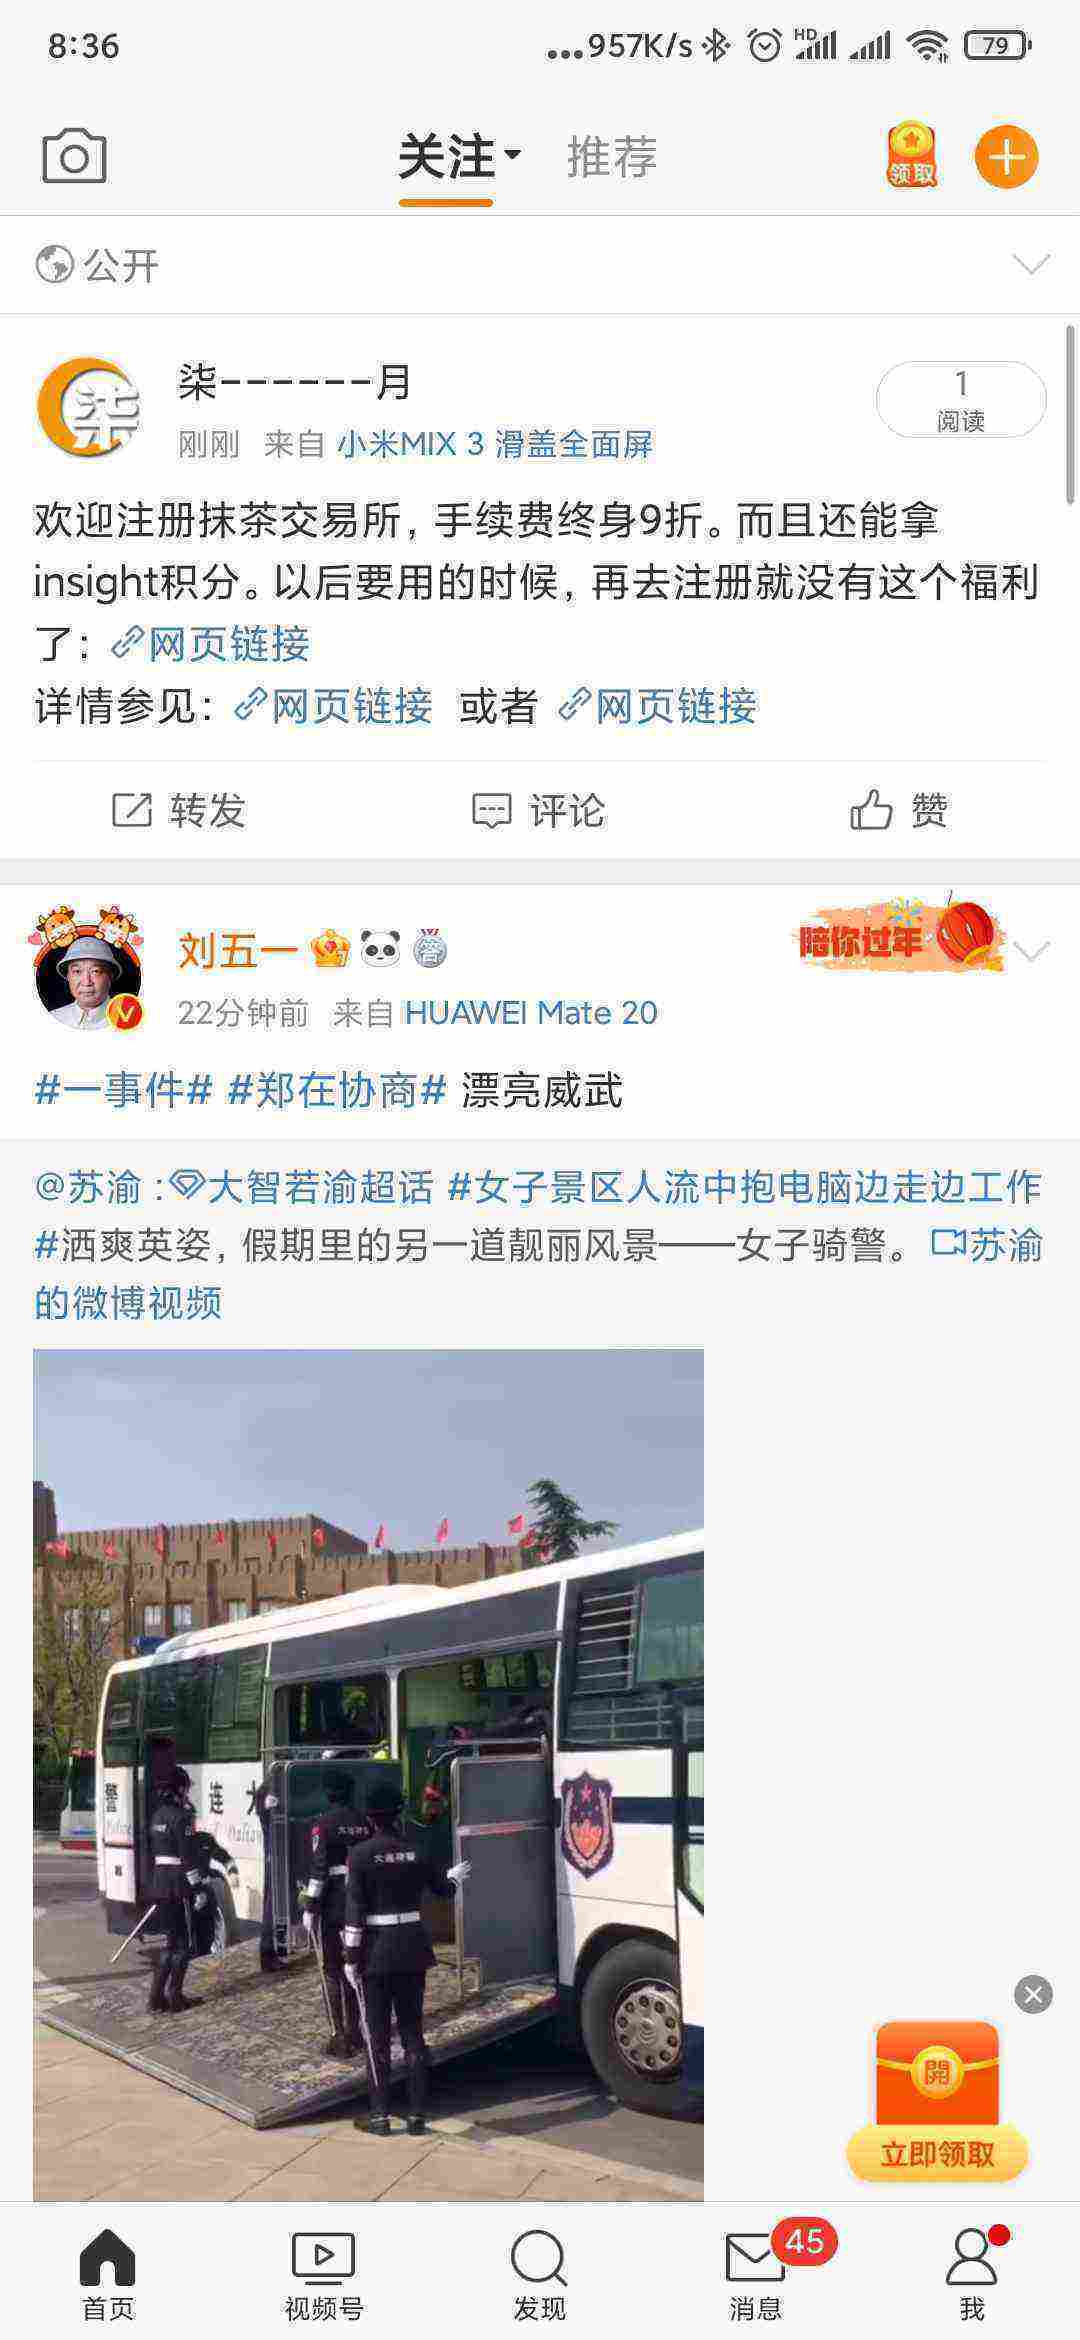 Screenshot_2021-05-03-08-36-01-539_com.sina.weibo.jpg